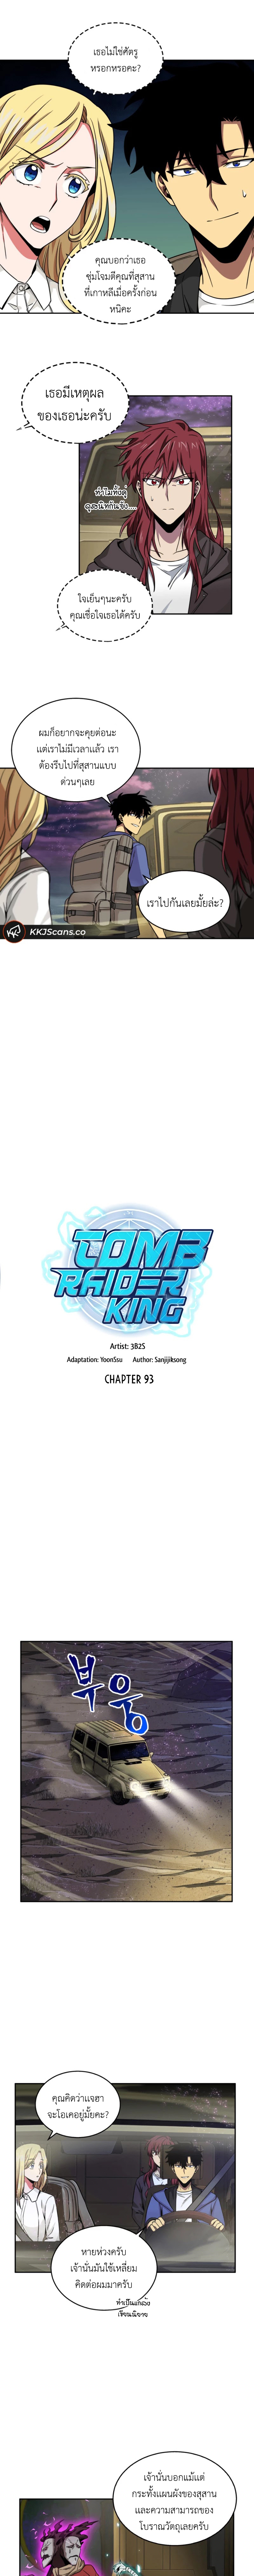 Tomb Raider King 93 (2)